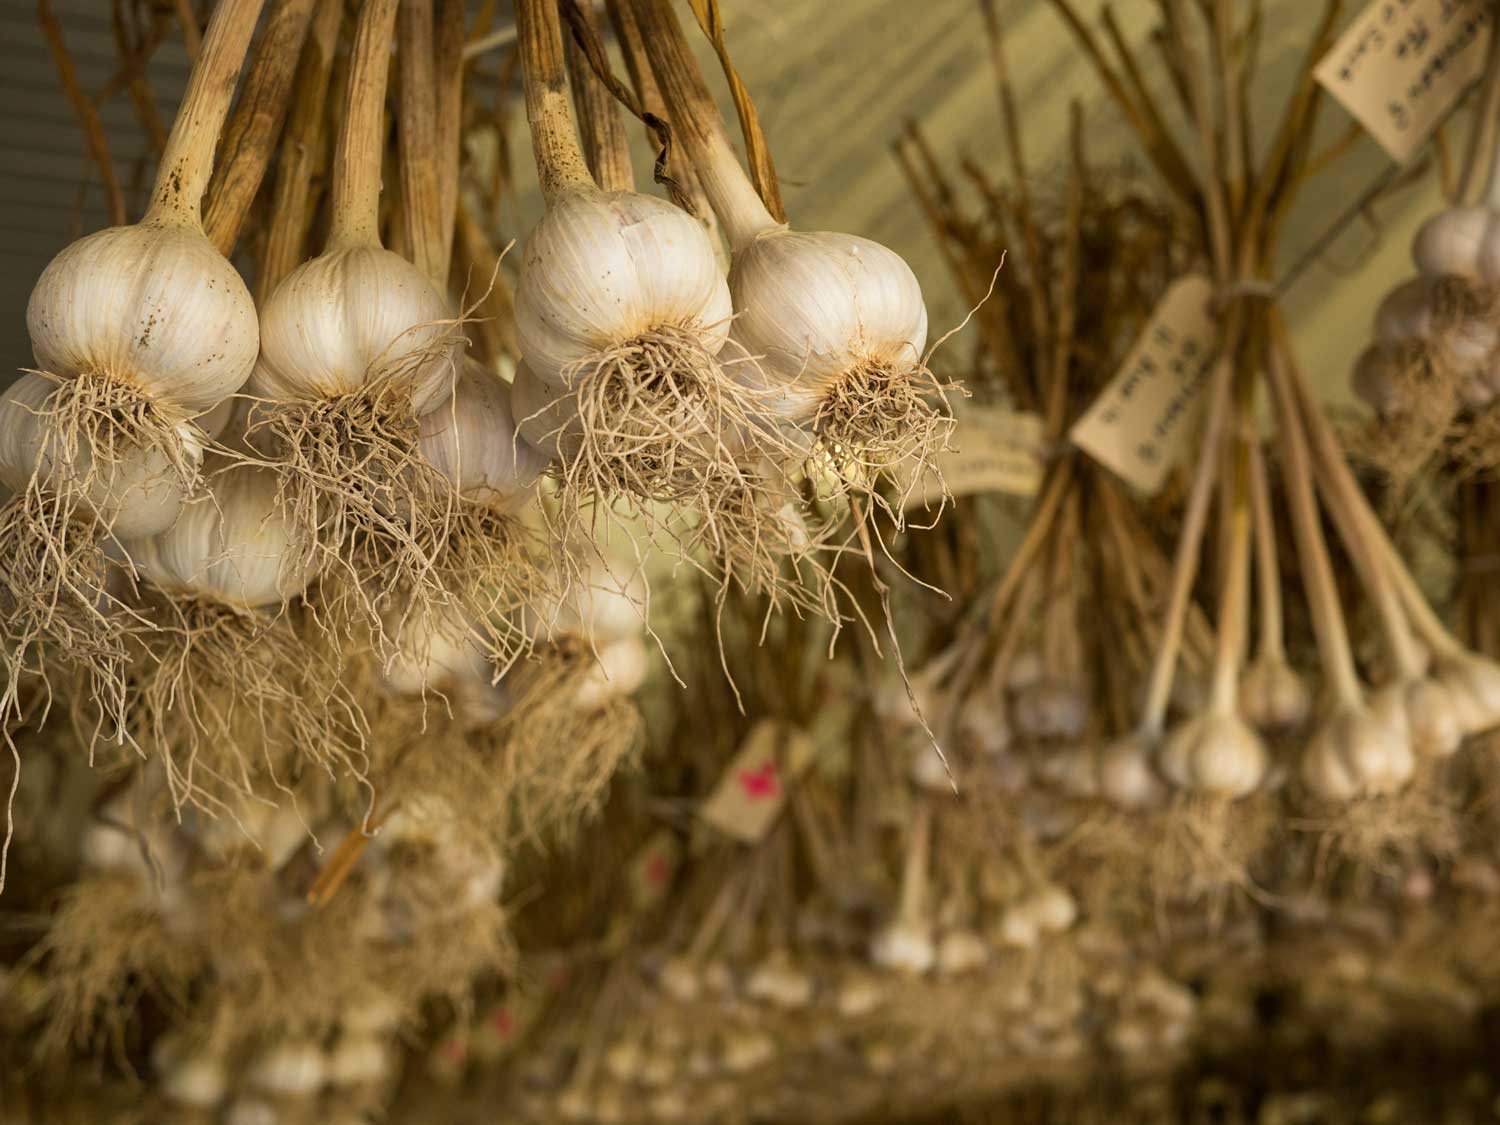 Curing (drying) fresh garlic hanging in cloves. 